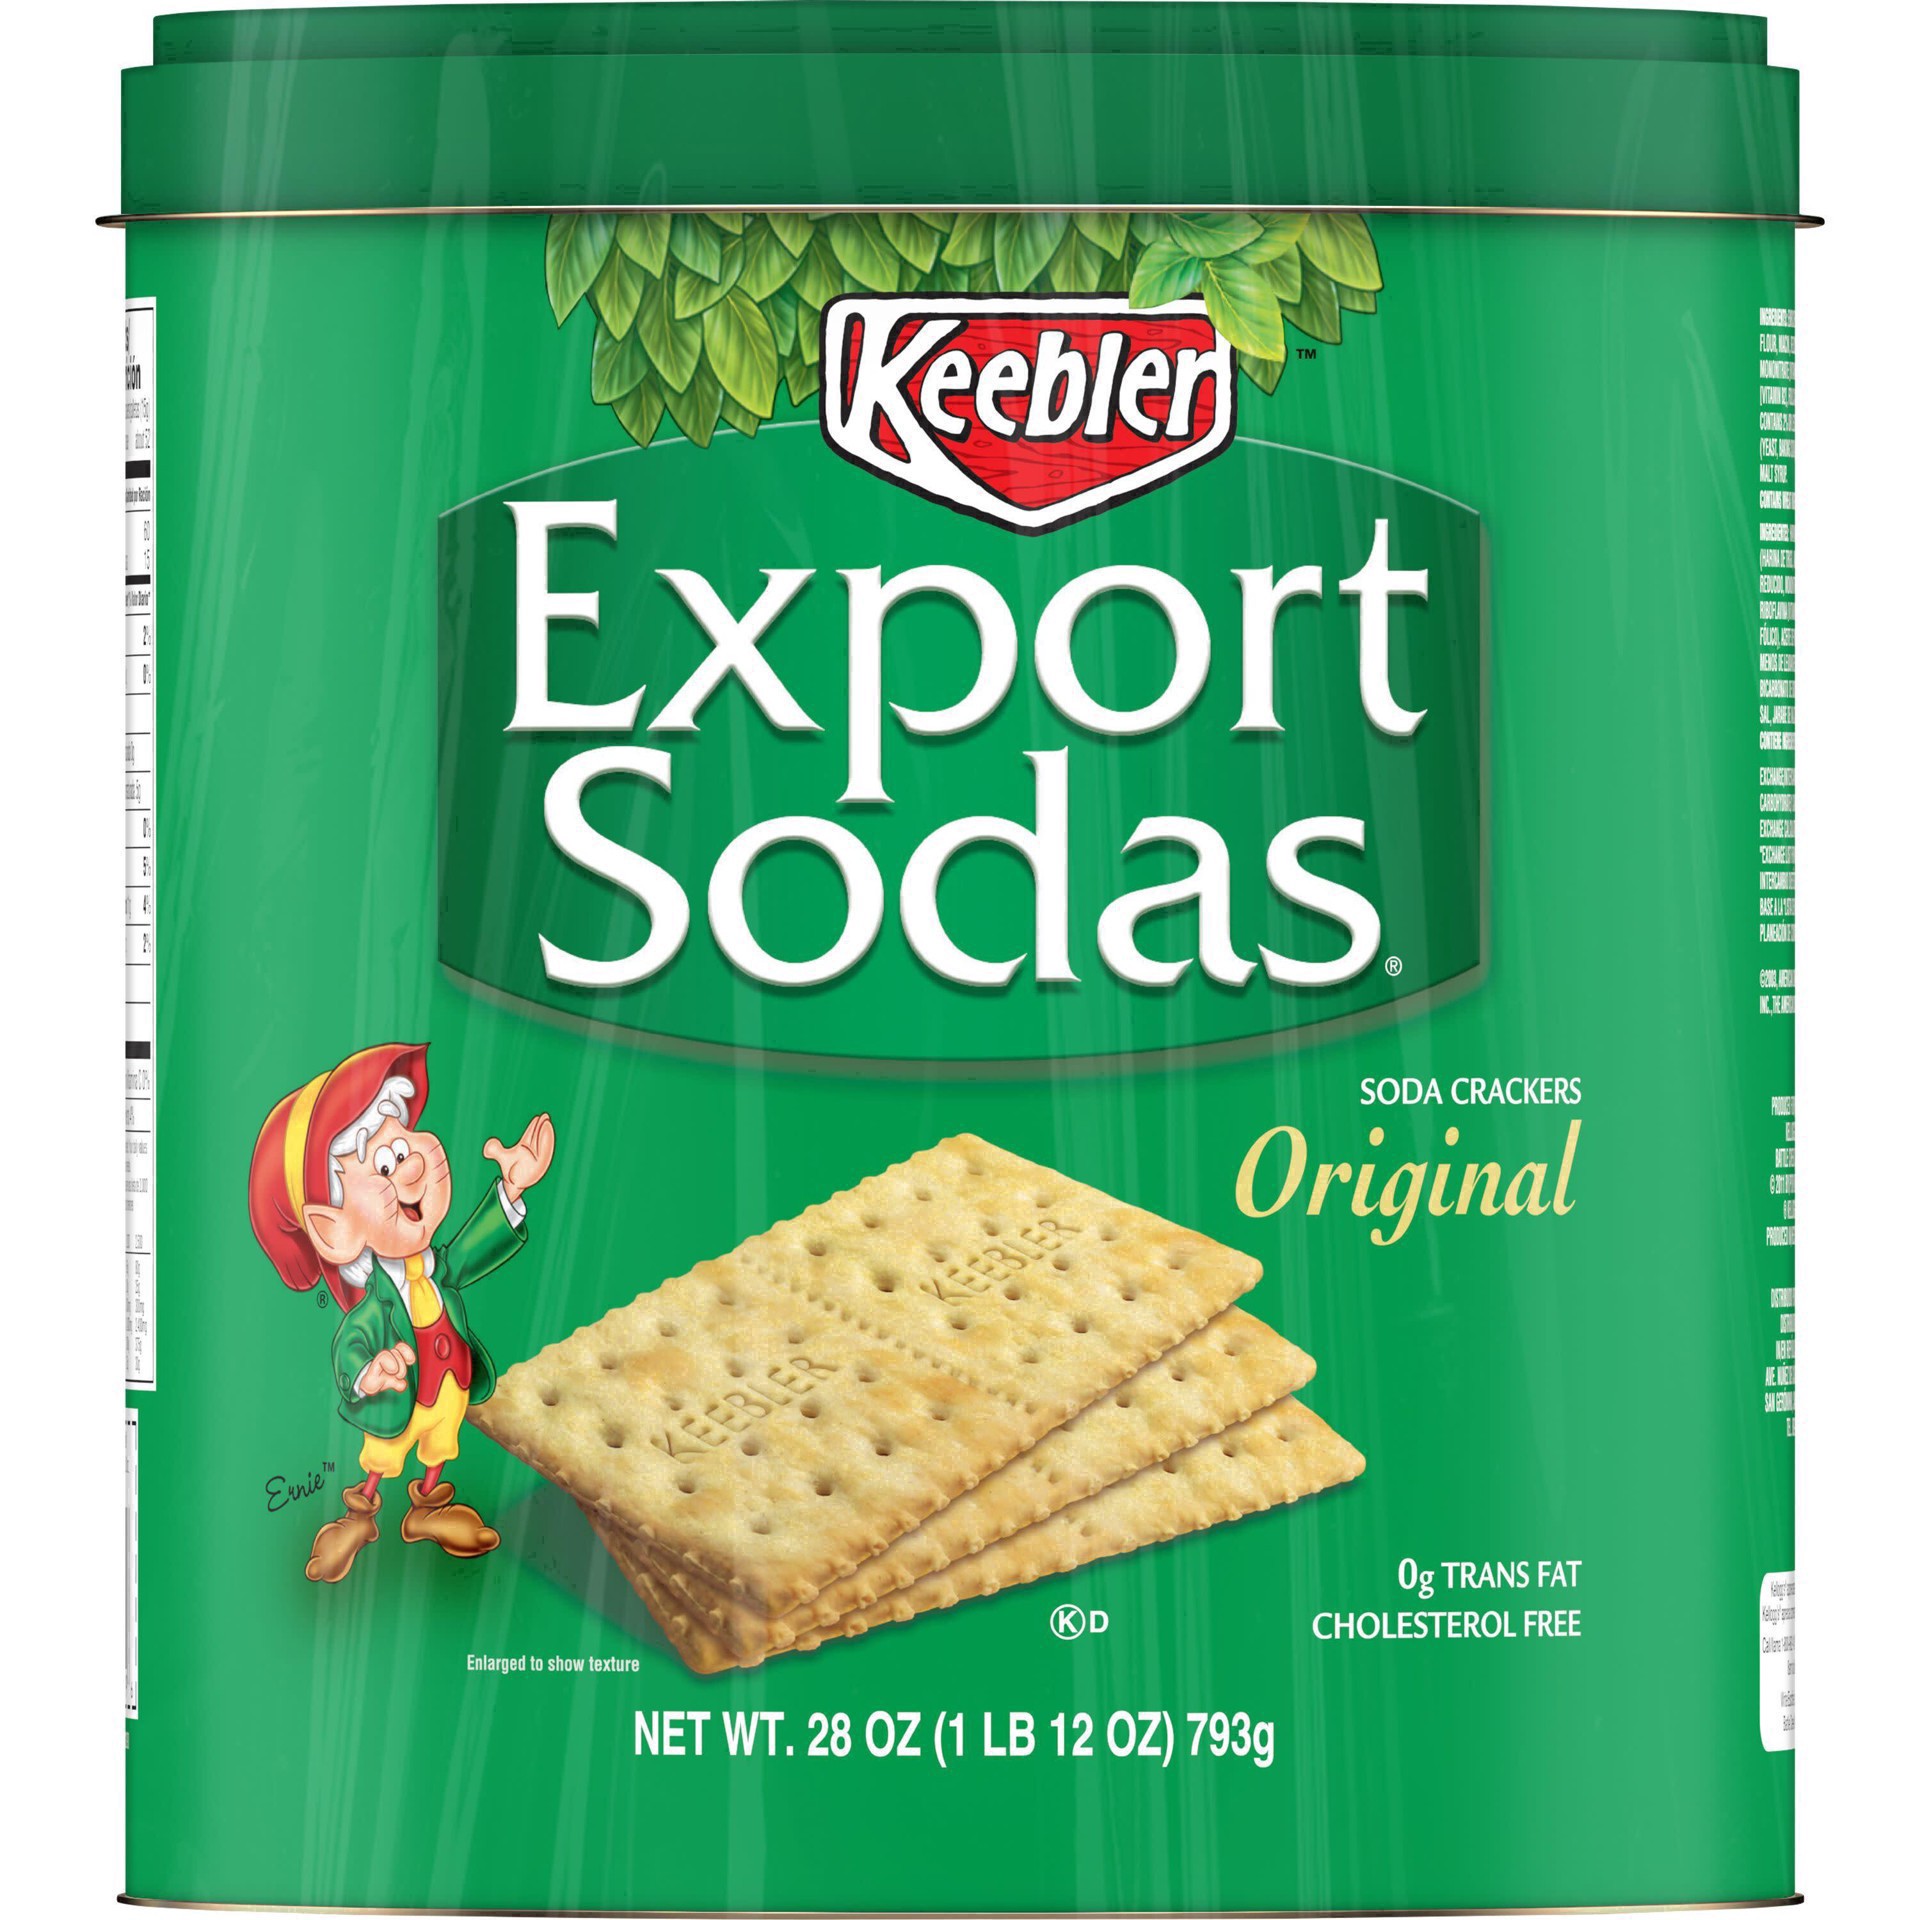 slide 15 of 63, Keebler Export Sodas Soda Crackers, Original, 28 oz, 28 oz